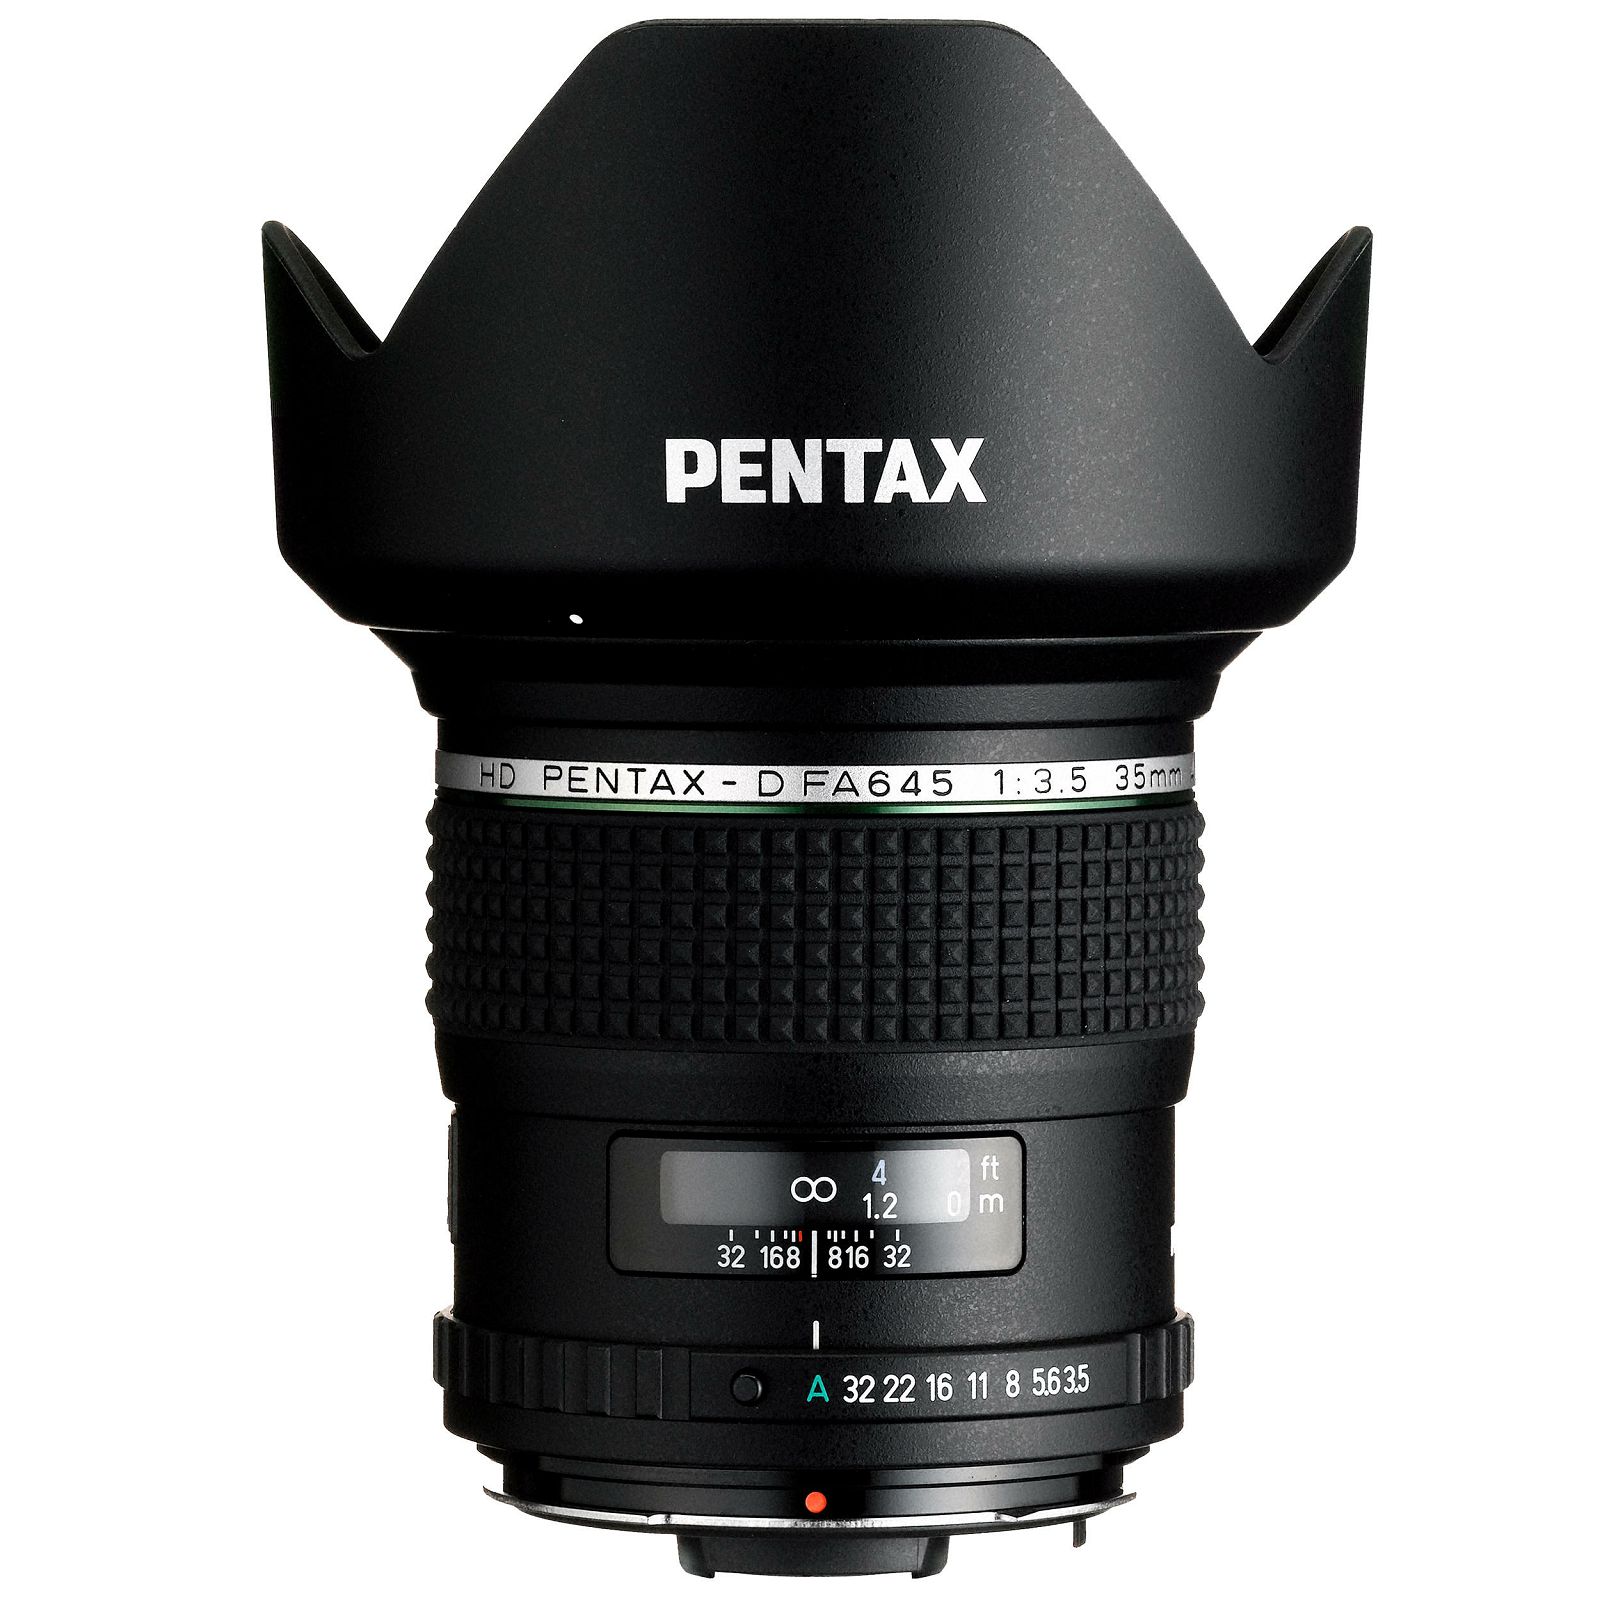 Pentax 35mm f/3.5 AL IF W/C širokokutni objektiv fiksne žarišne duljine wide angle prime lens HD PENTAX-D FA645 F3.5AL SMC D-FA 645 (26450)